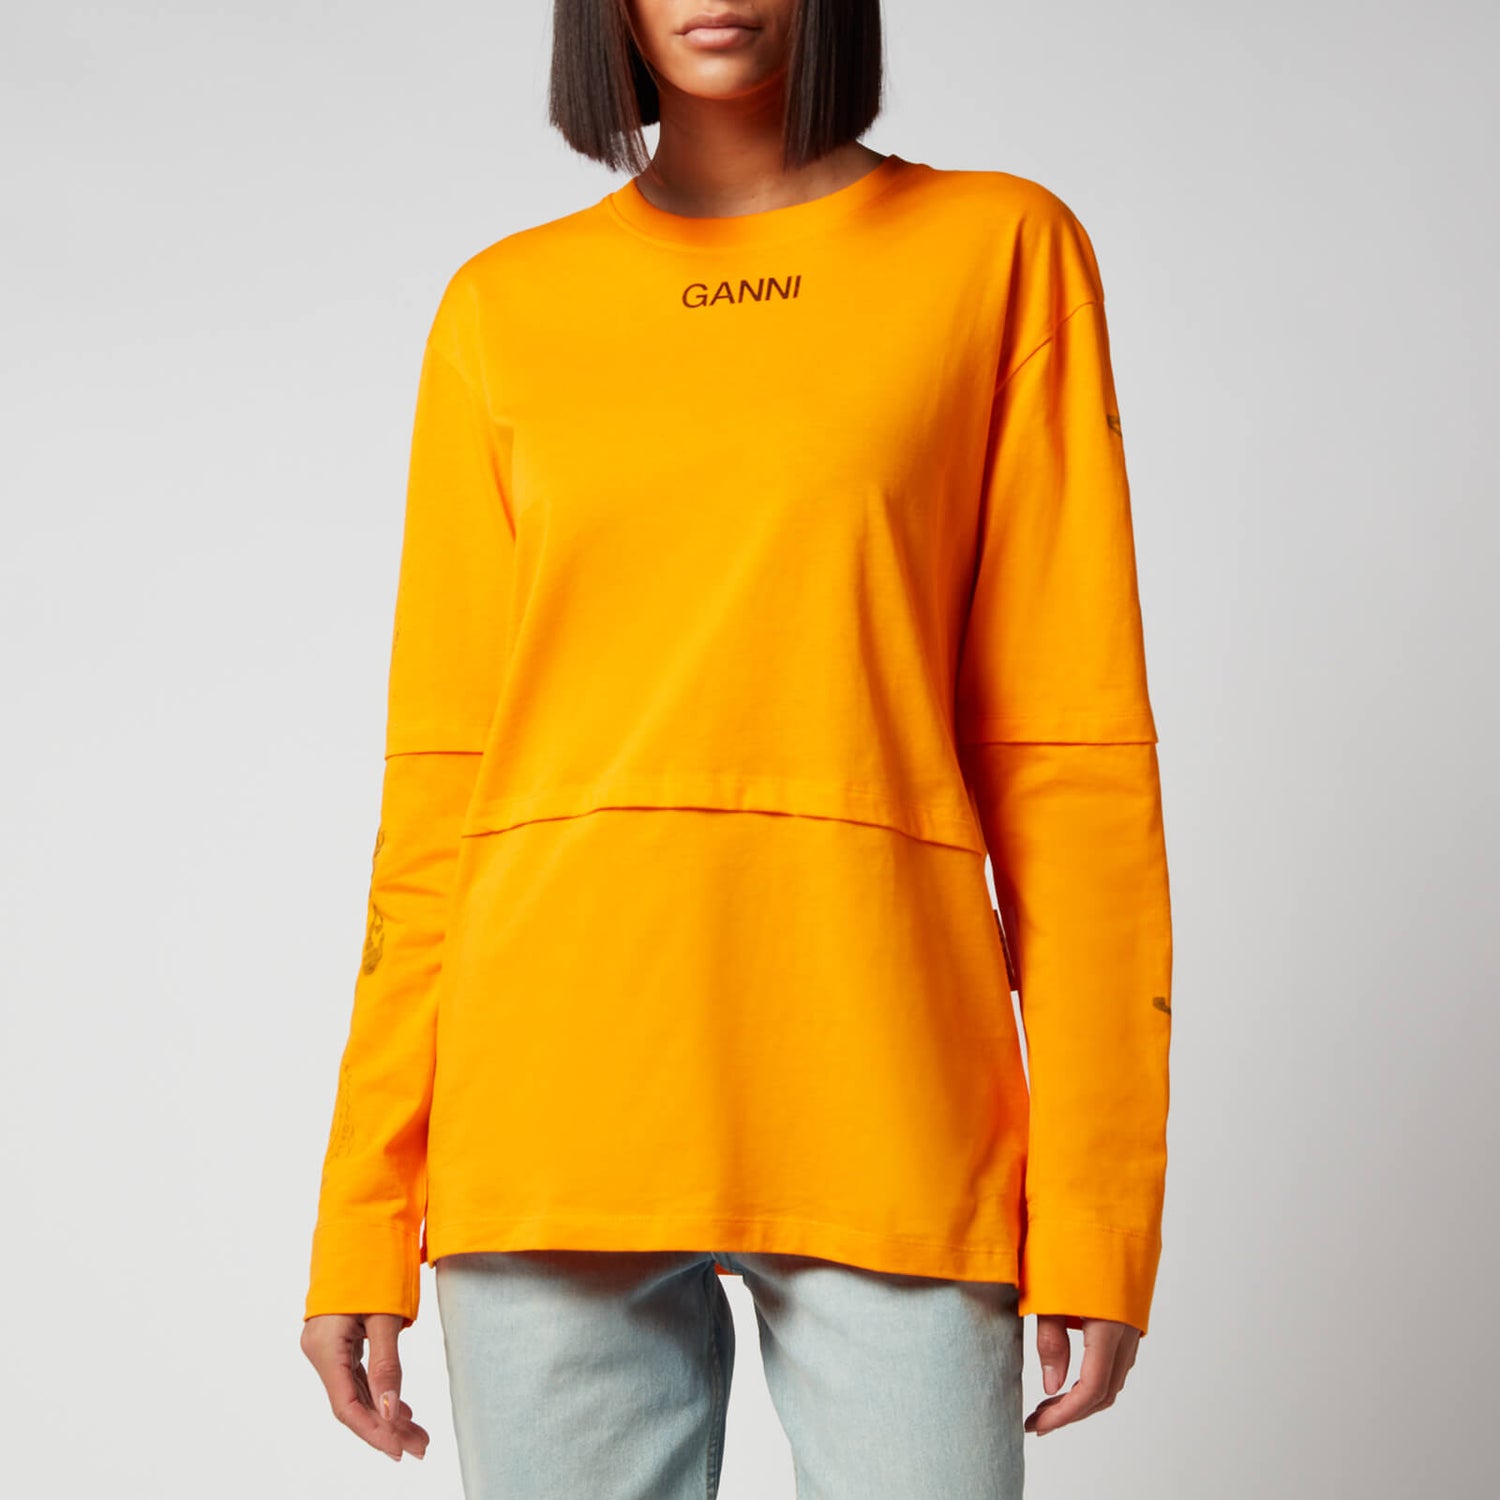 Ganni Women's Light Cotton Jersey Long Sleeved Top - Bright Marigold - L